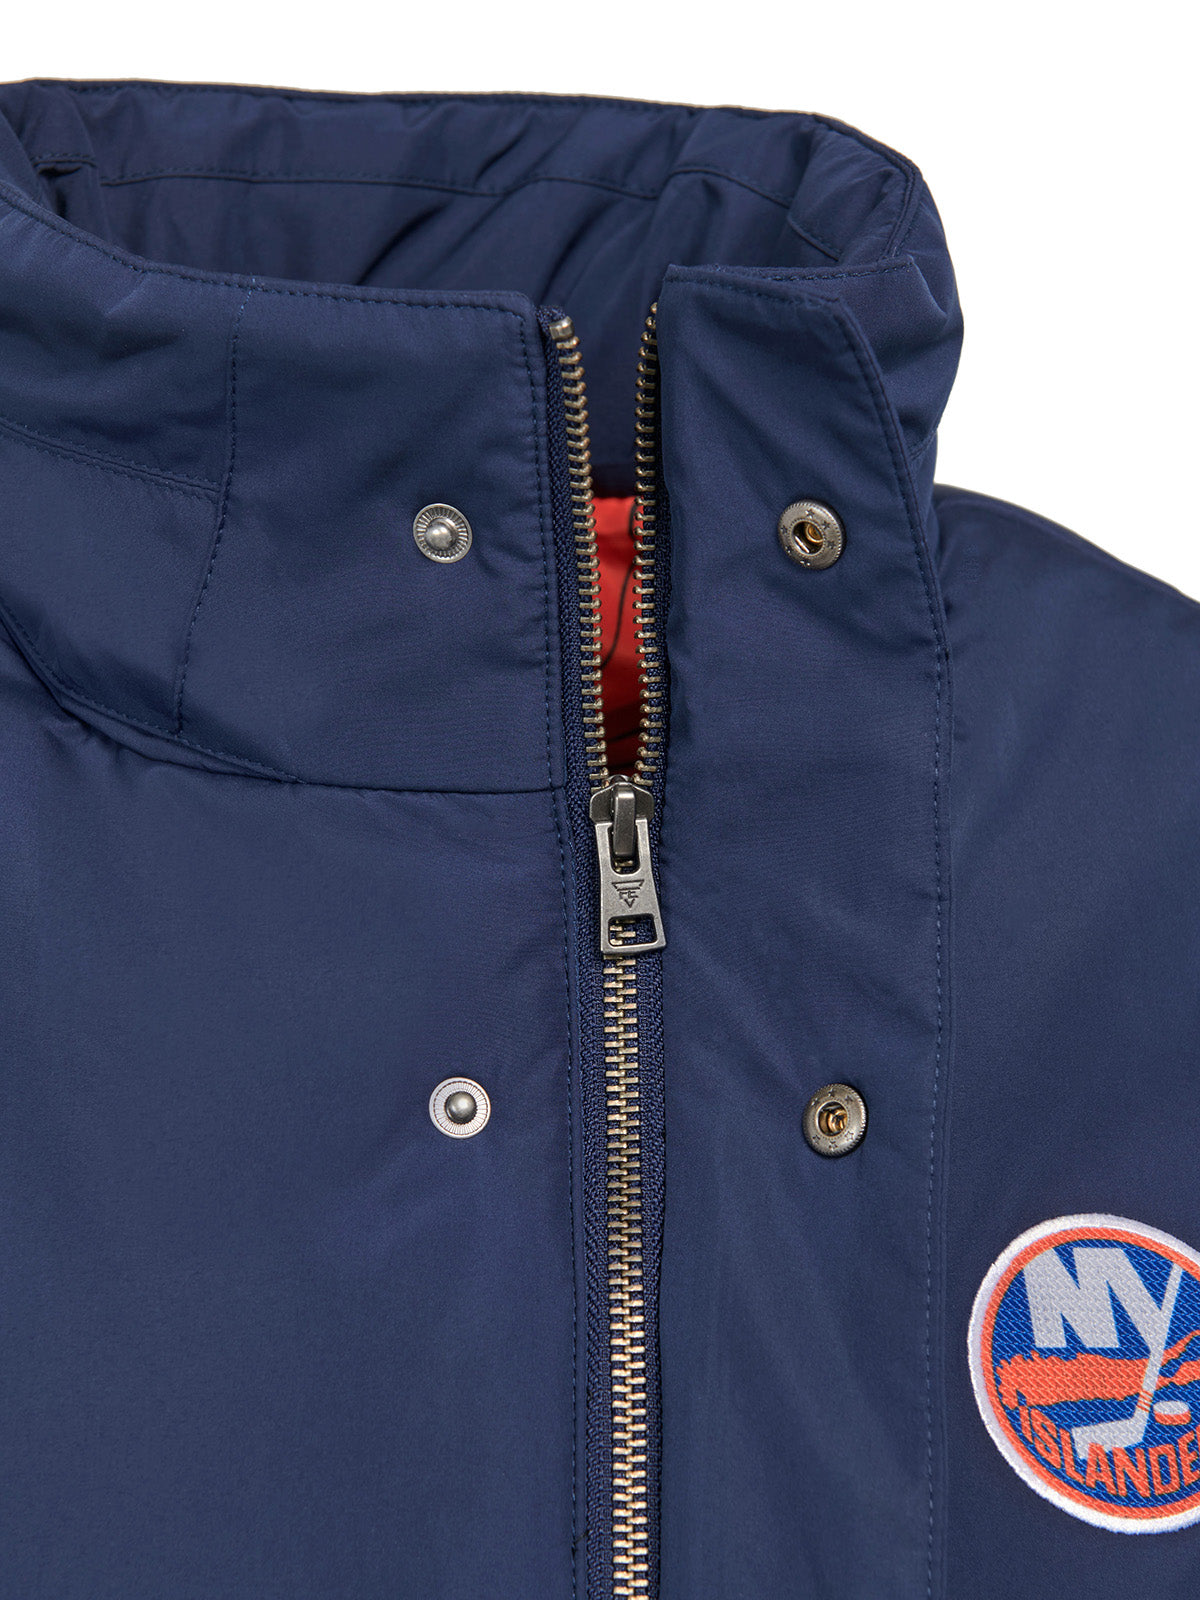 New York Islanders Coach's Jacket